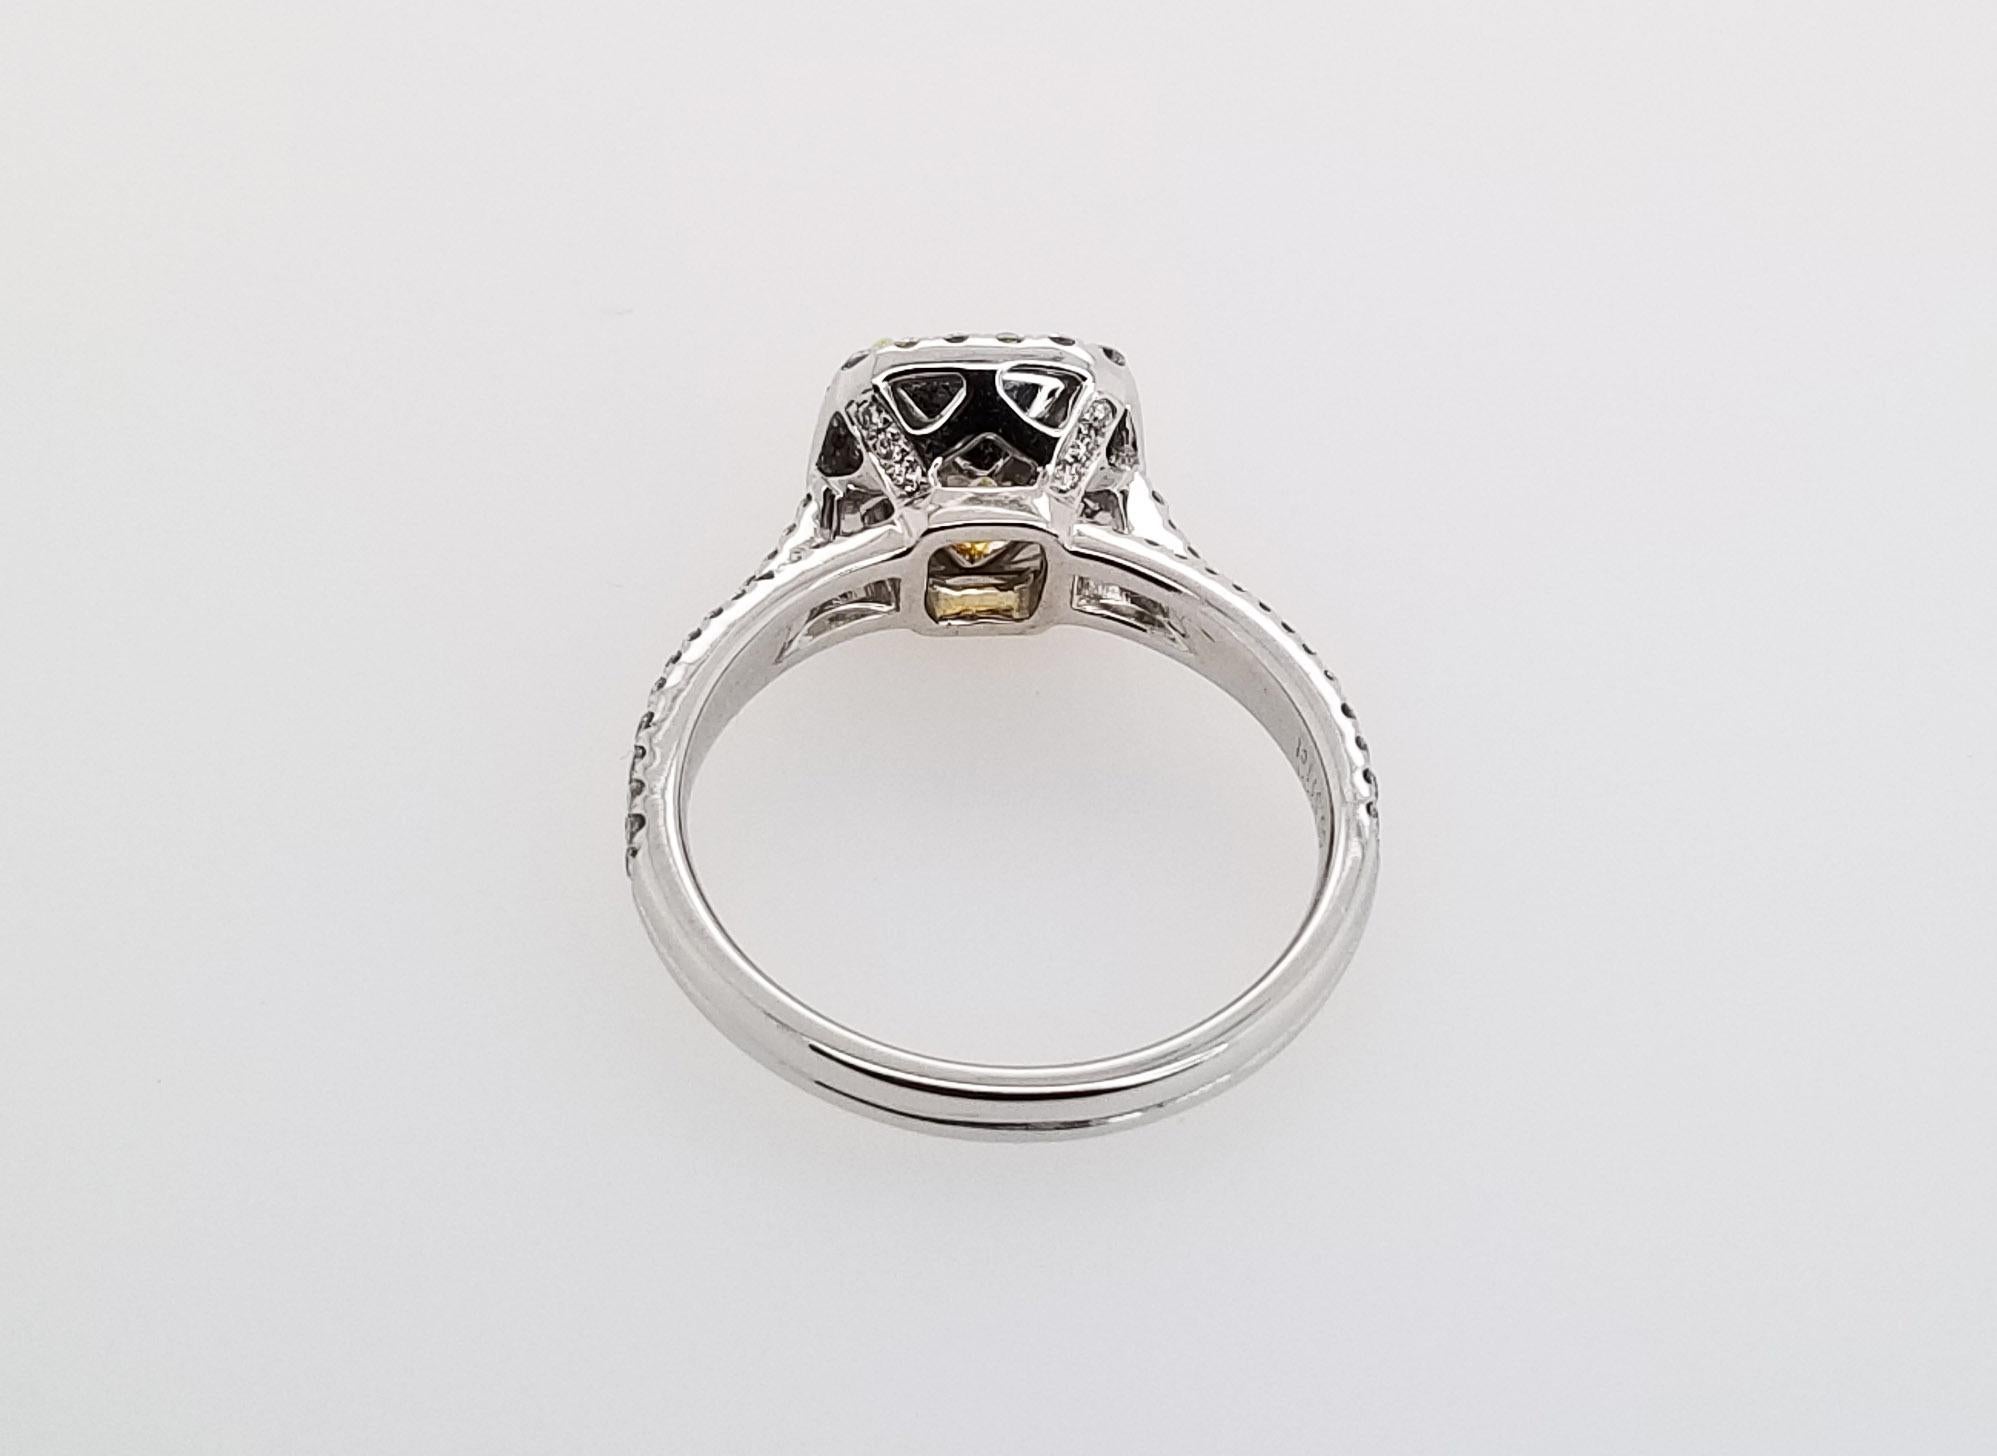 Scarselli GIA 2 Cushion Cut Fancy Yellow Diamond Engagement Ring in 18 Karat 3